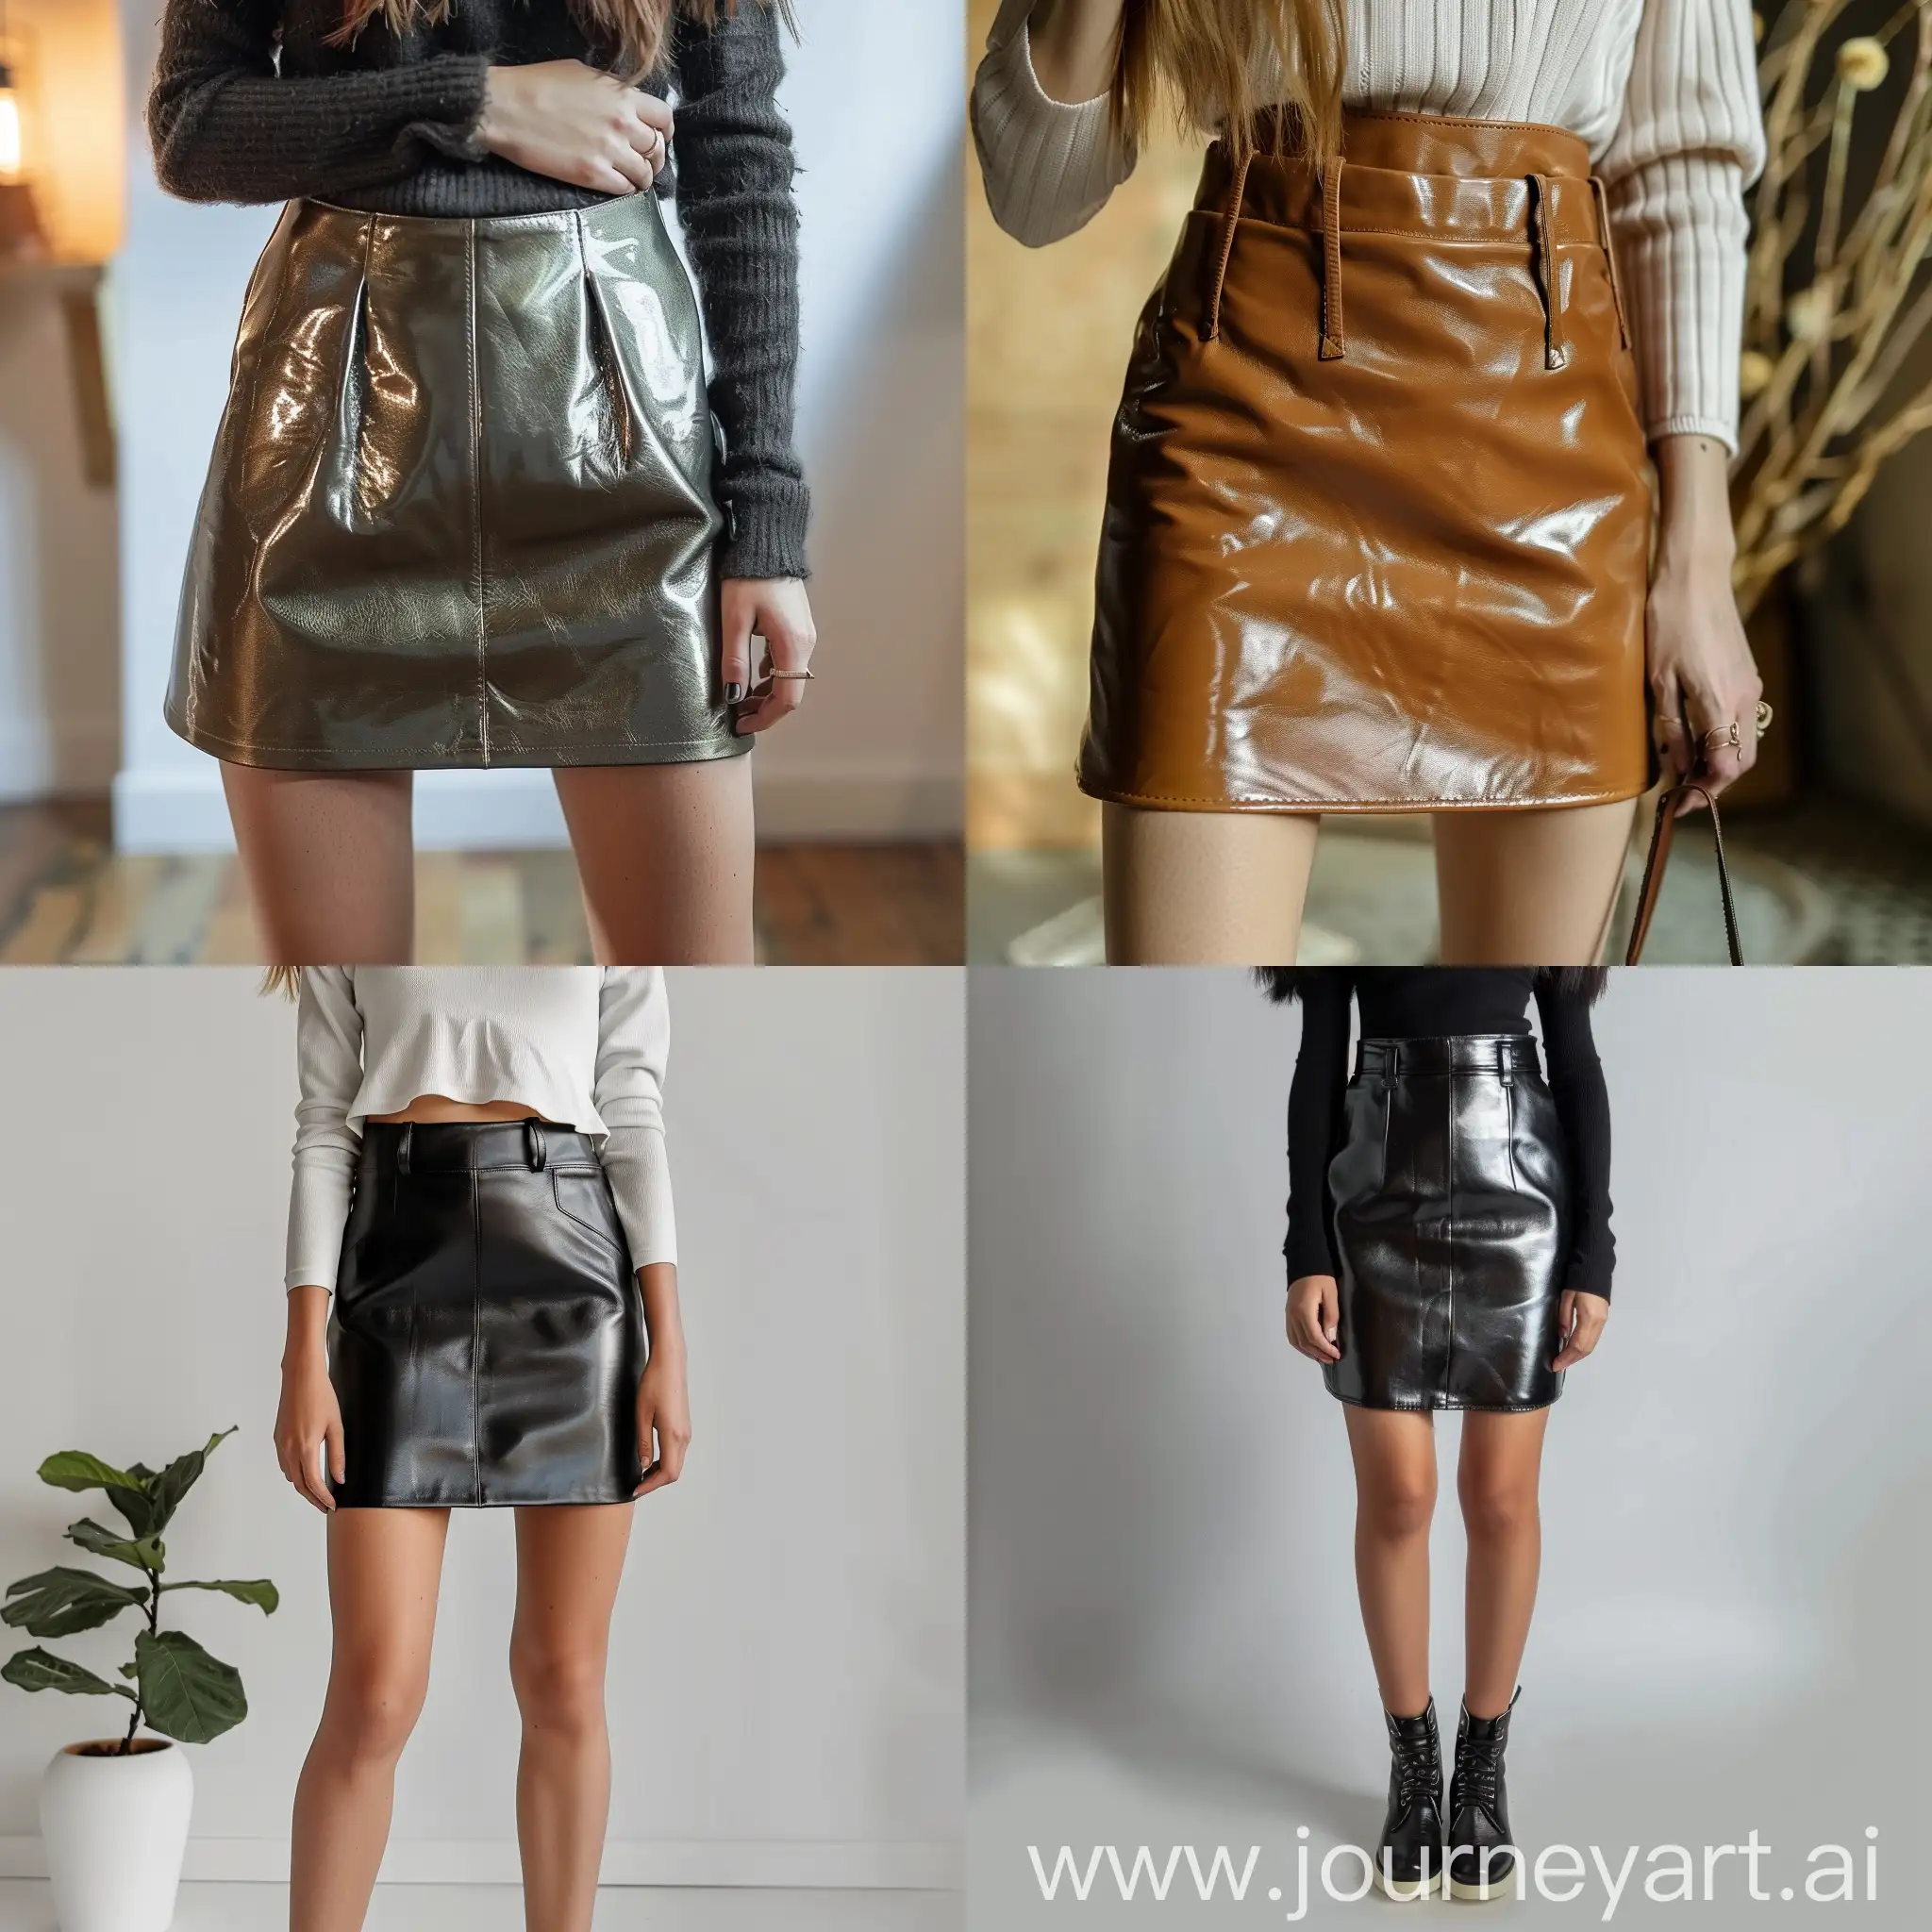 Fashionable-Leather-Skirt-on-Display